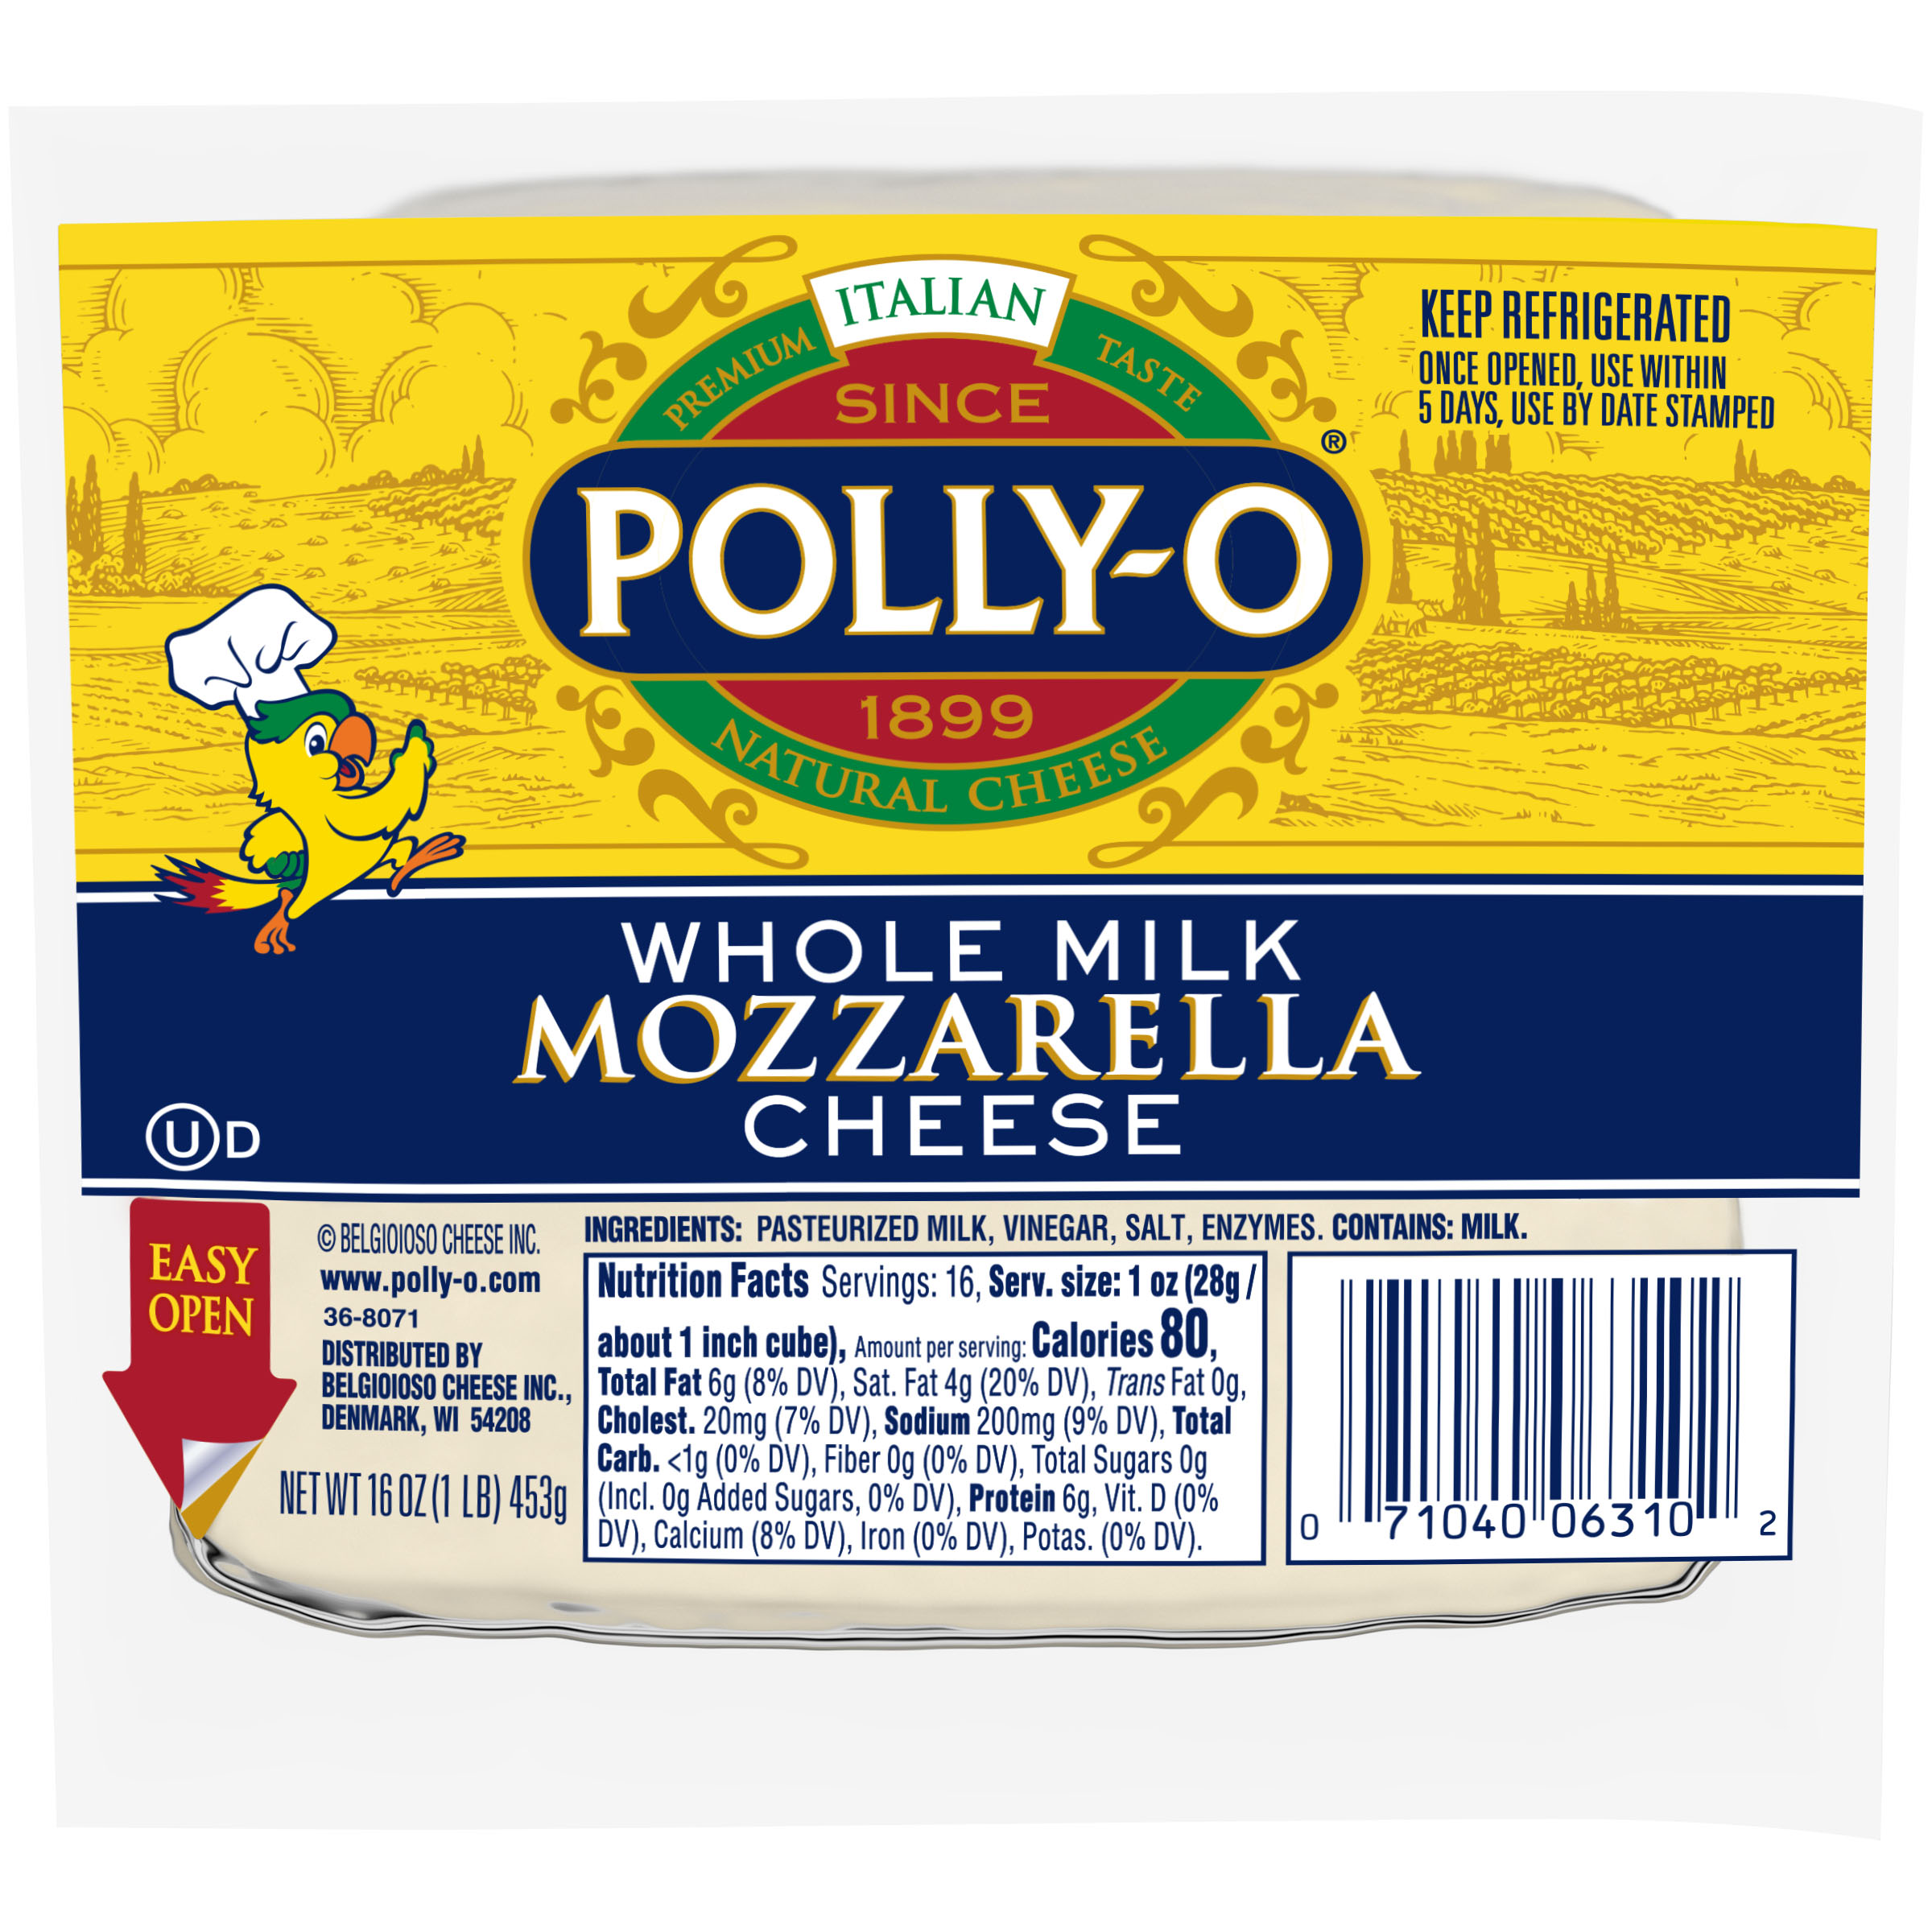 Low Moisture Whole Milk Mozzarella ⓊD, 16 oz. Chunk